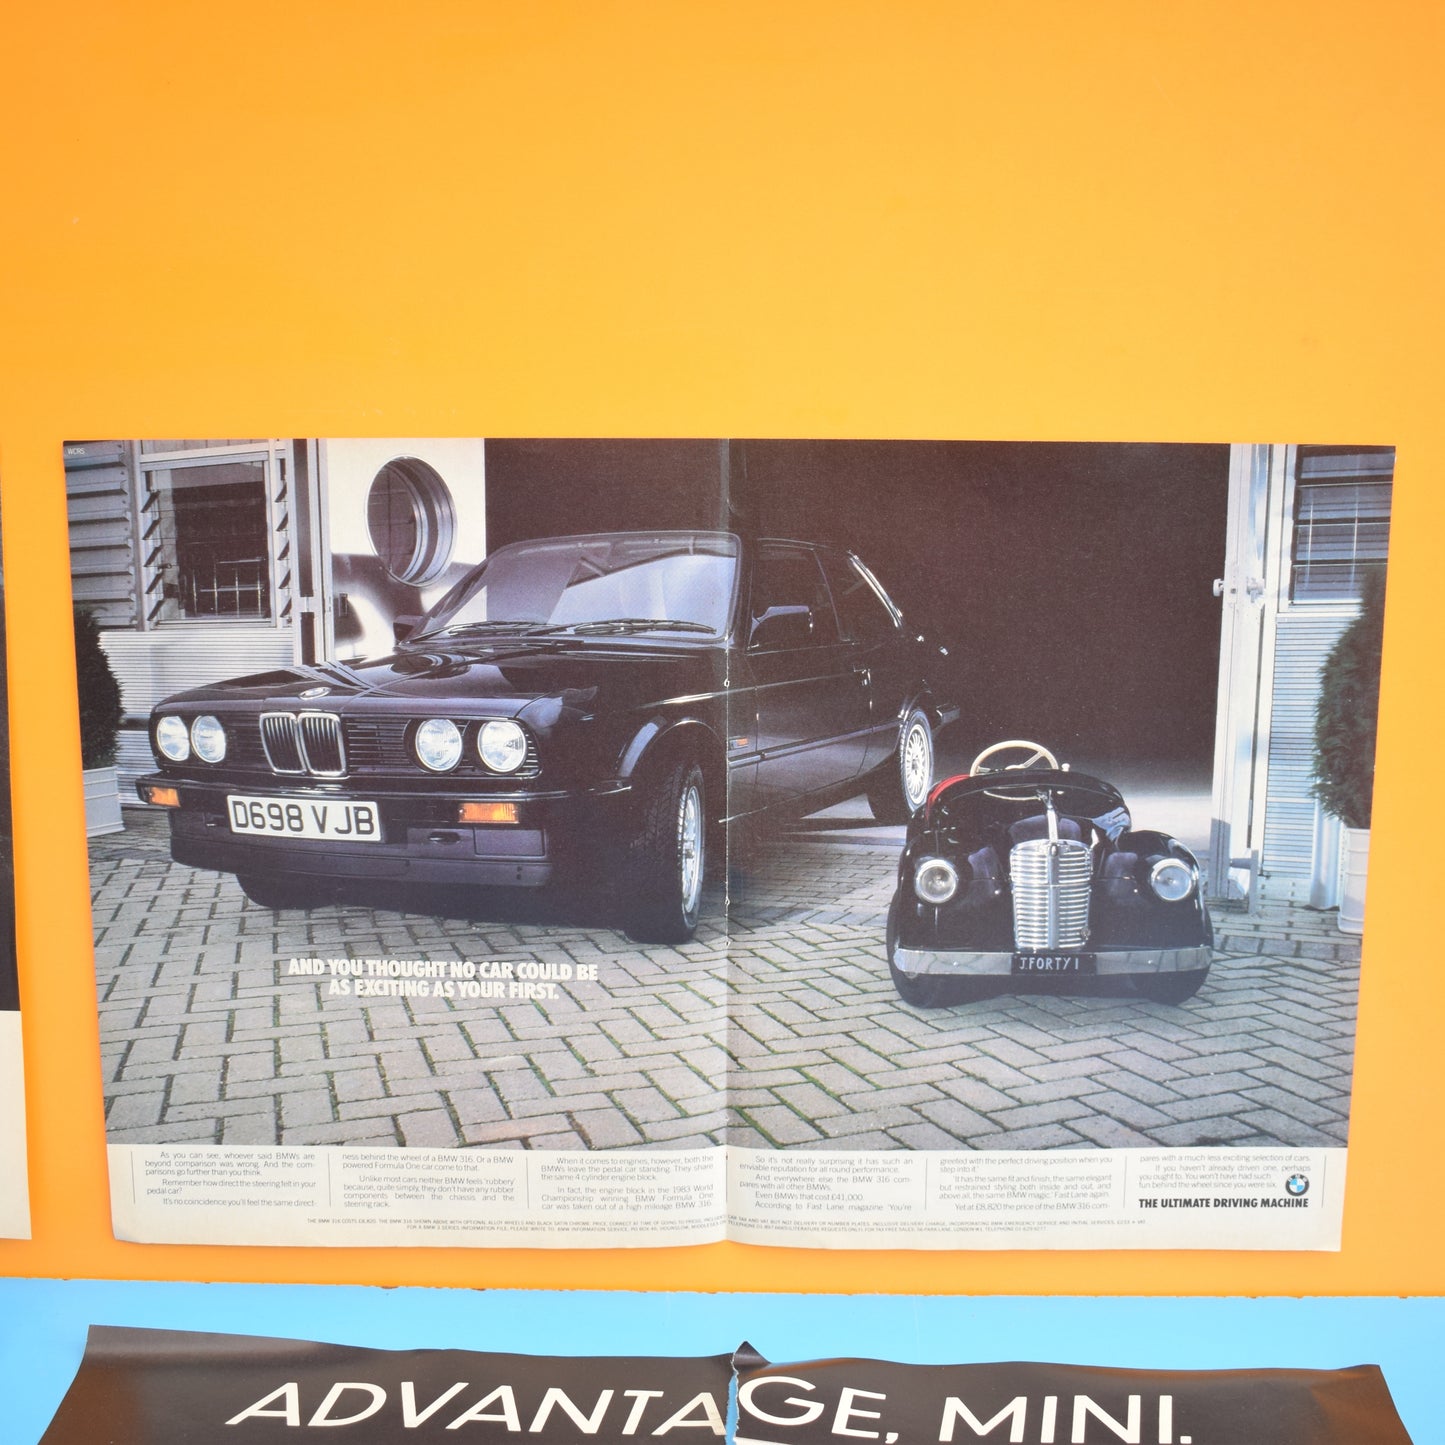 Vintage 1980s Adverts - Cars